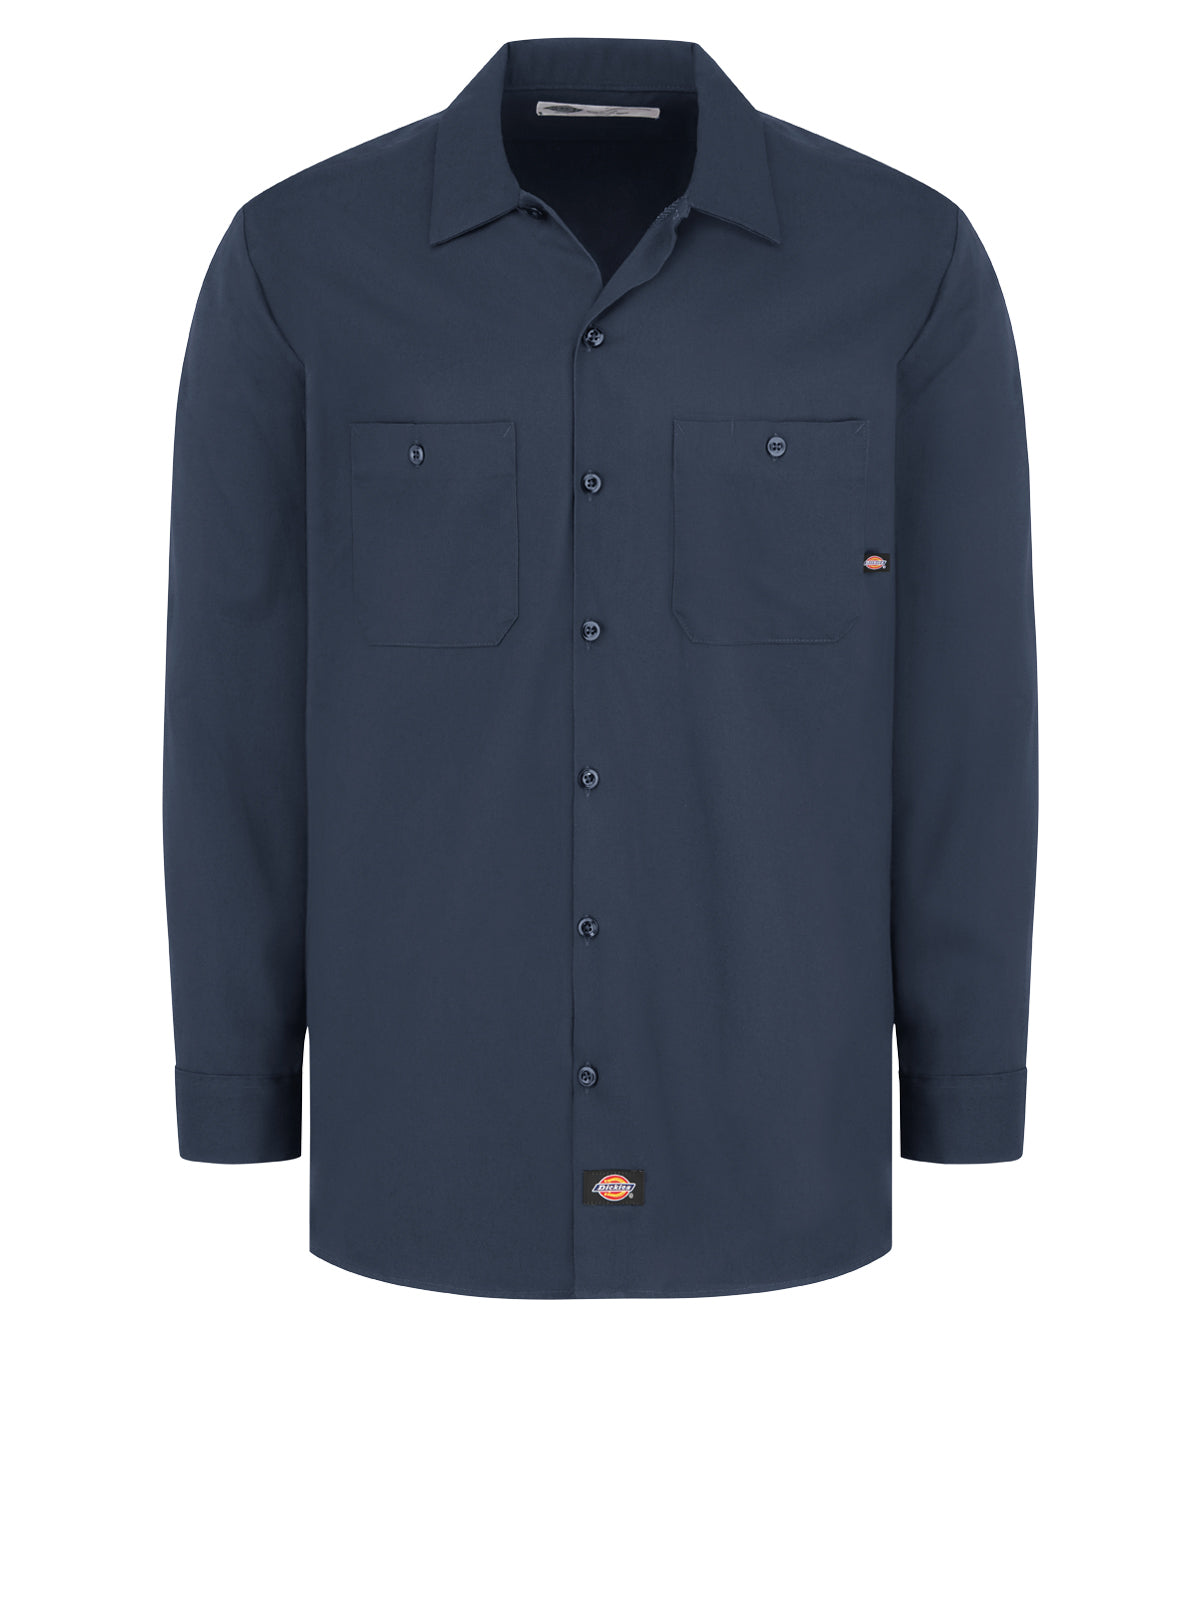 Men's Industrial Cotton Long-Sleeve Work Shirt - L307 - Dark Navy